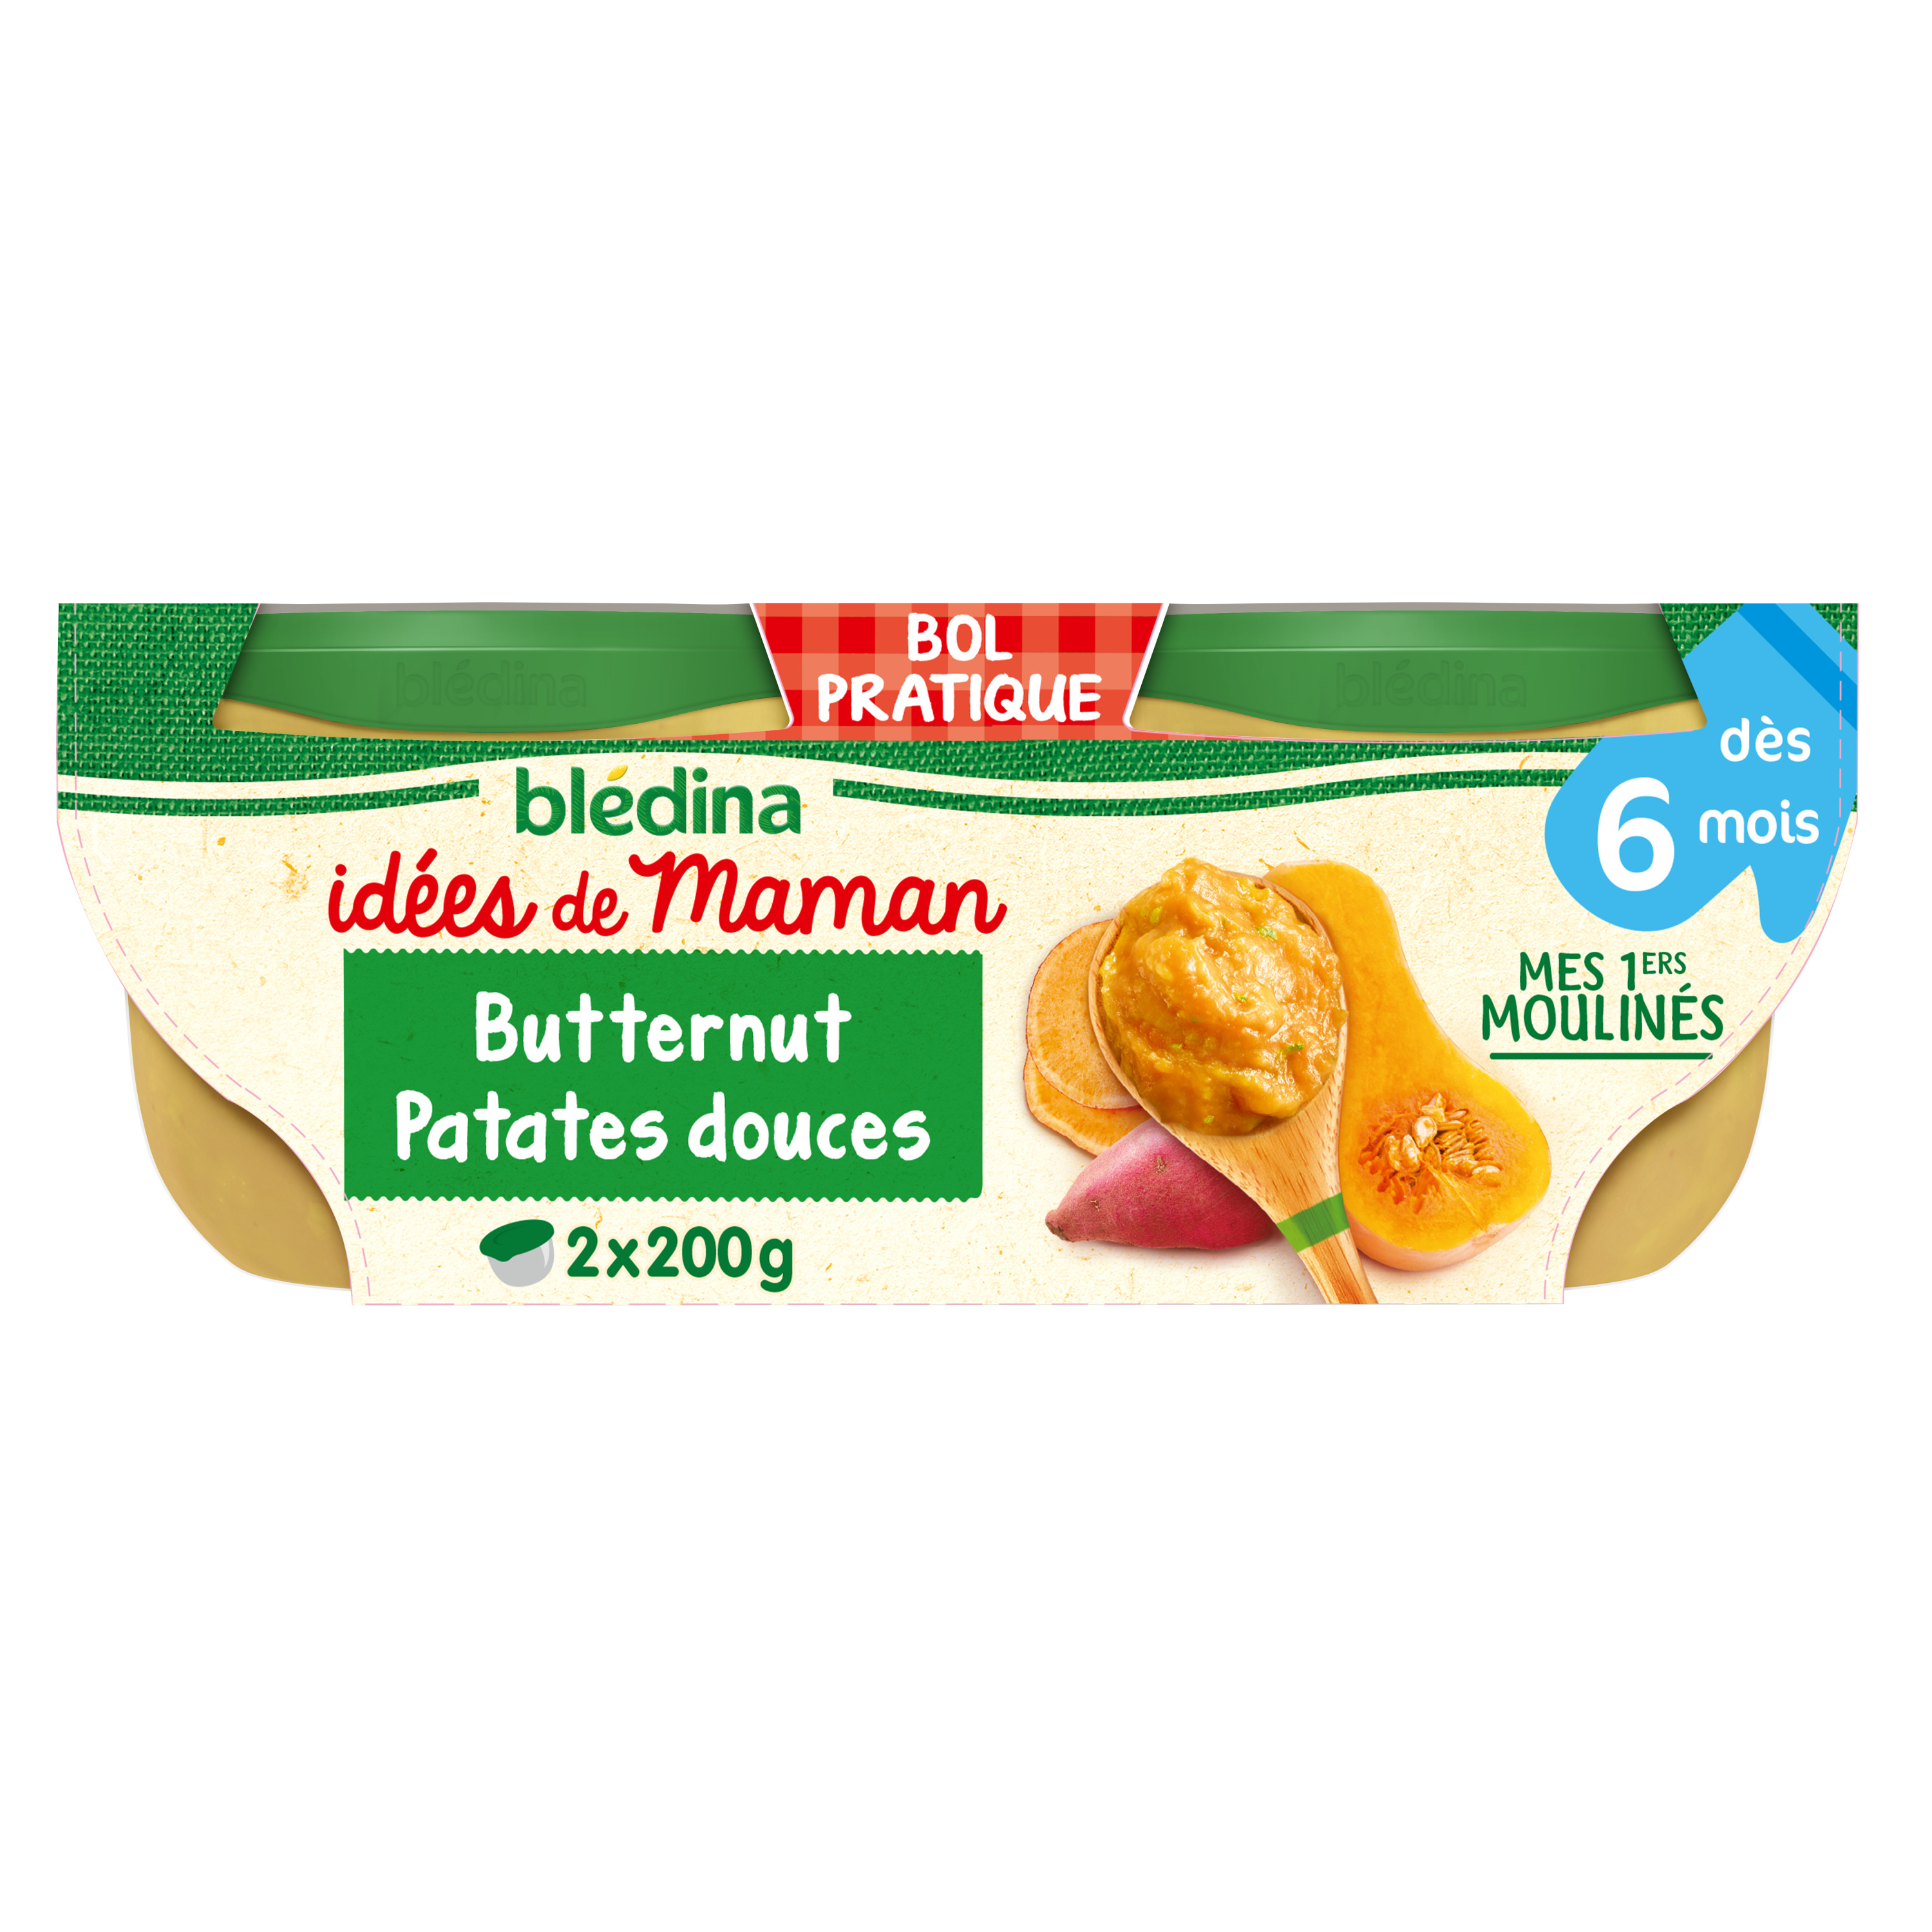 Bledina Idees De Maman Bol Potirons Patates Douces Des 8 Mois 2x0g Pas Cher A Prix Auchan